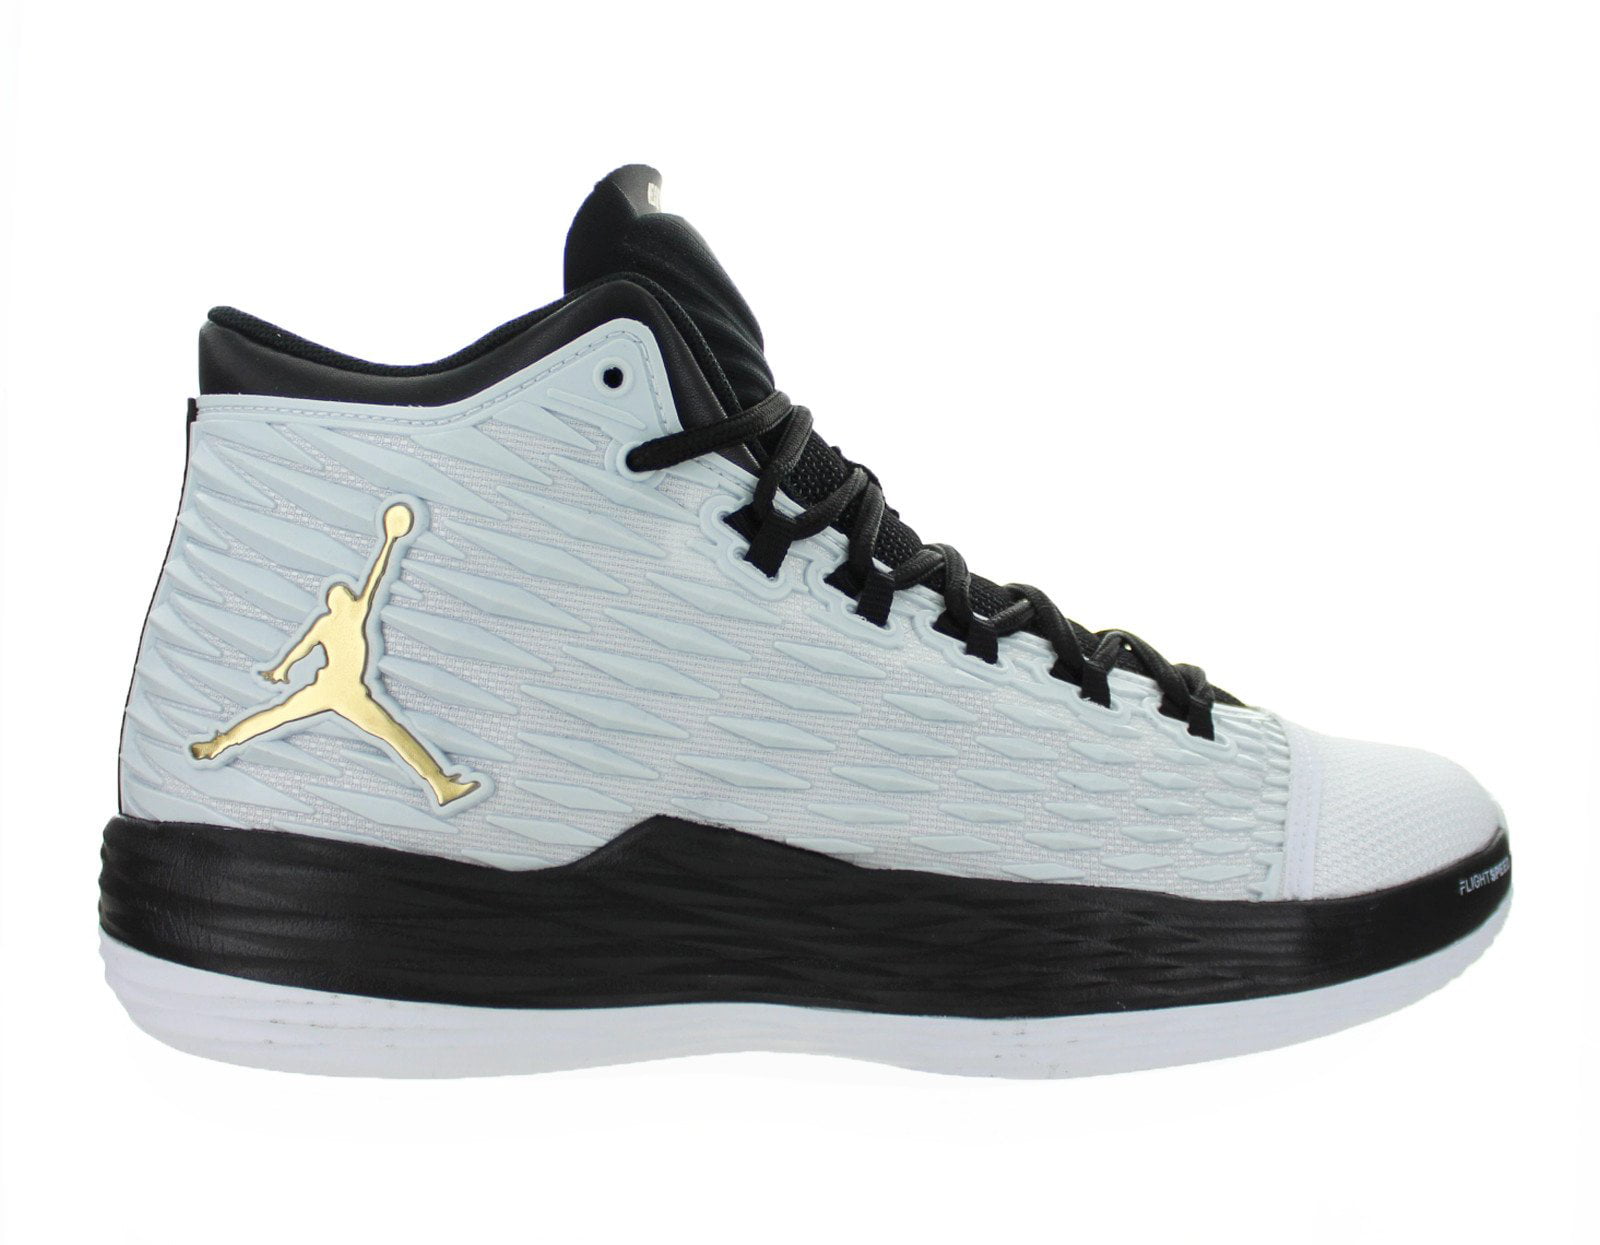 taal dak ventilatie Nike Air Jordan Melo M13 White/Metallic Gold-Black 881562-131 Men's Size 13  - Walmart.com